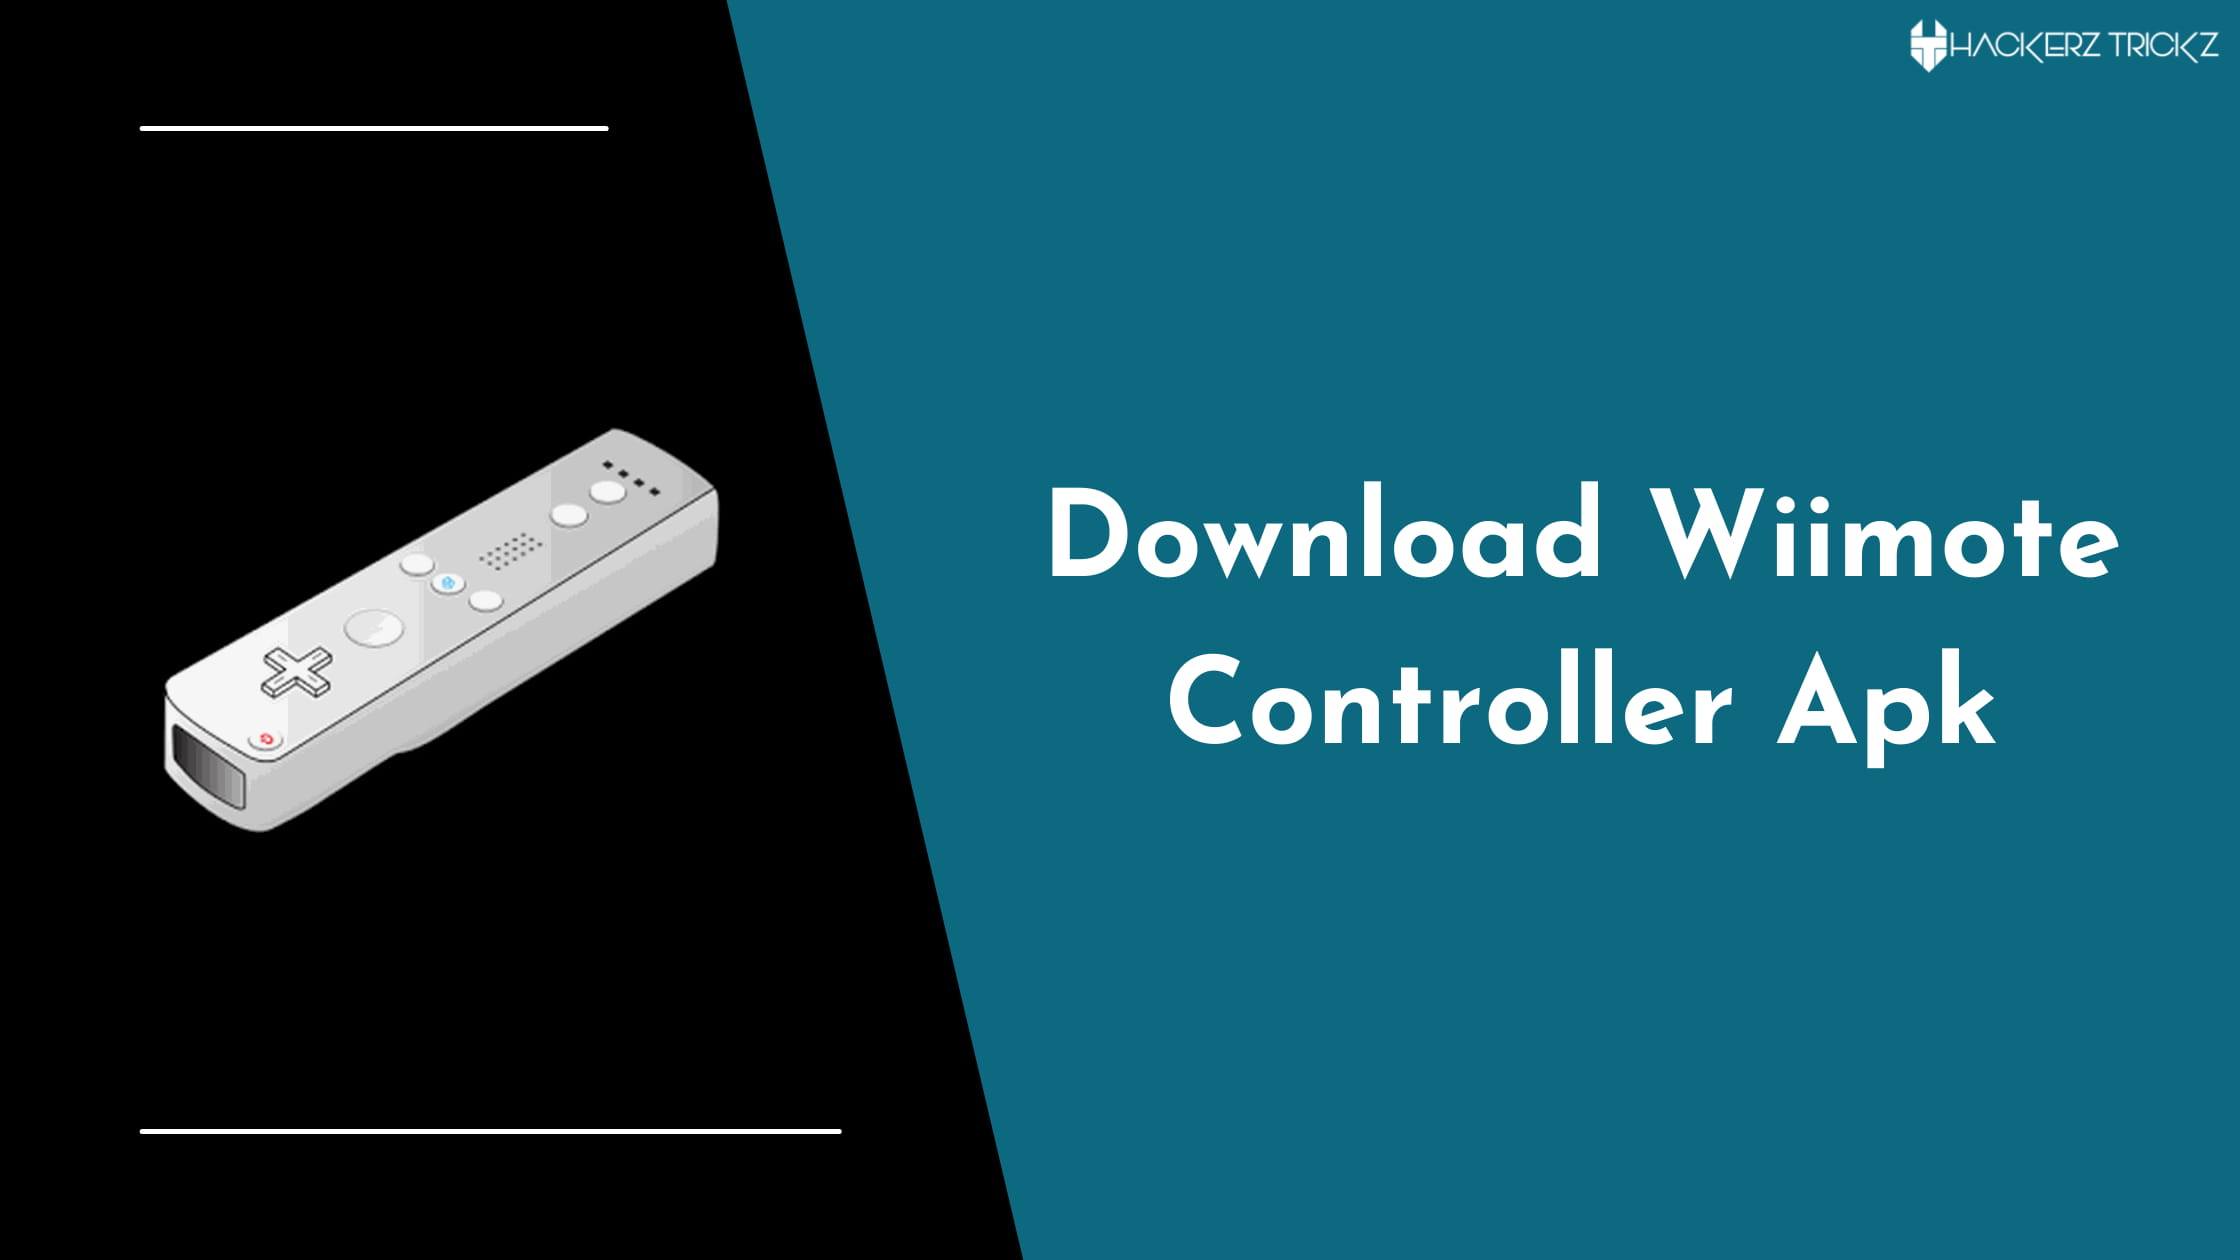 Download Wiimote Controller Apk